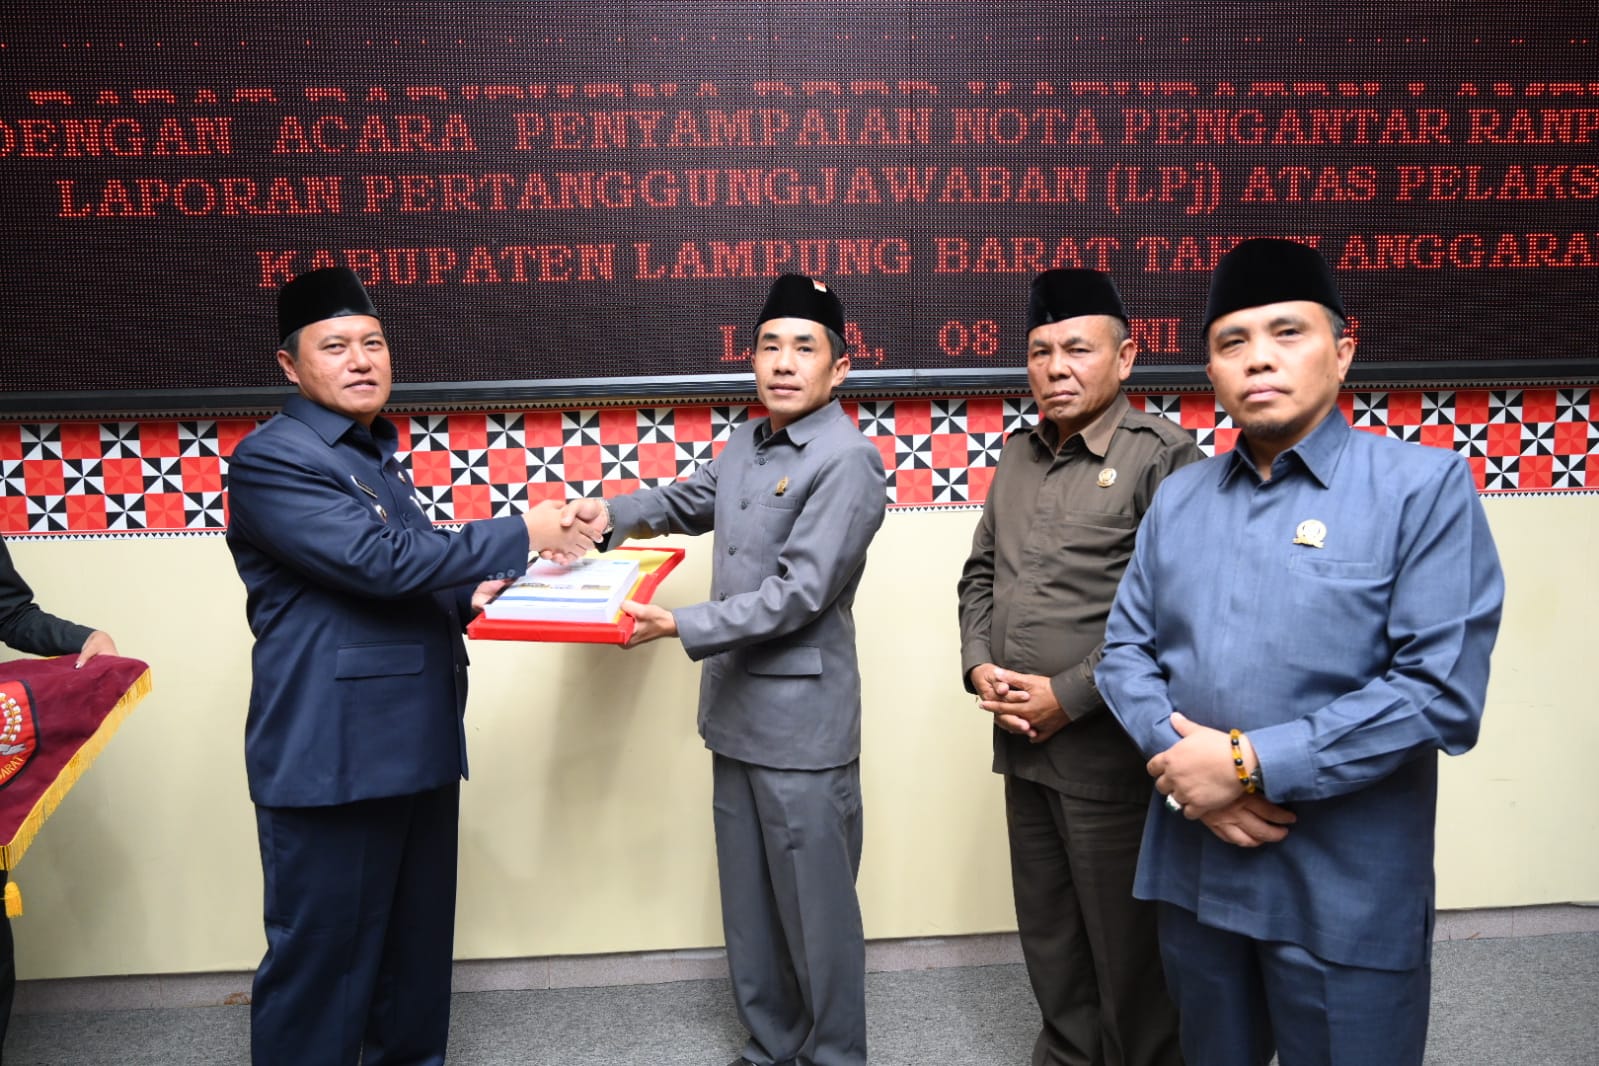 APBD Lampung Barat 'Hidup' dari Dana Transfer, Rasio PAD Terhadap Total Pendapatan Hanya 6,86 Persen